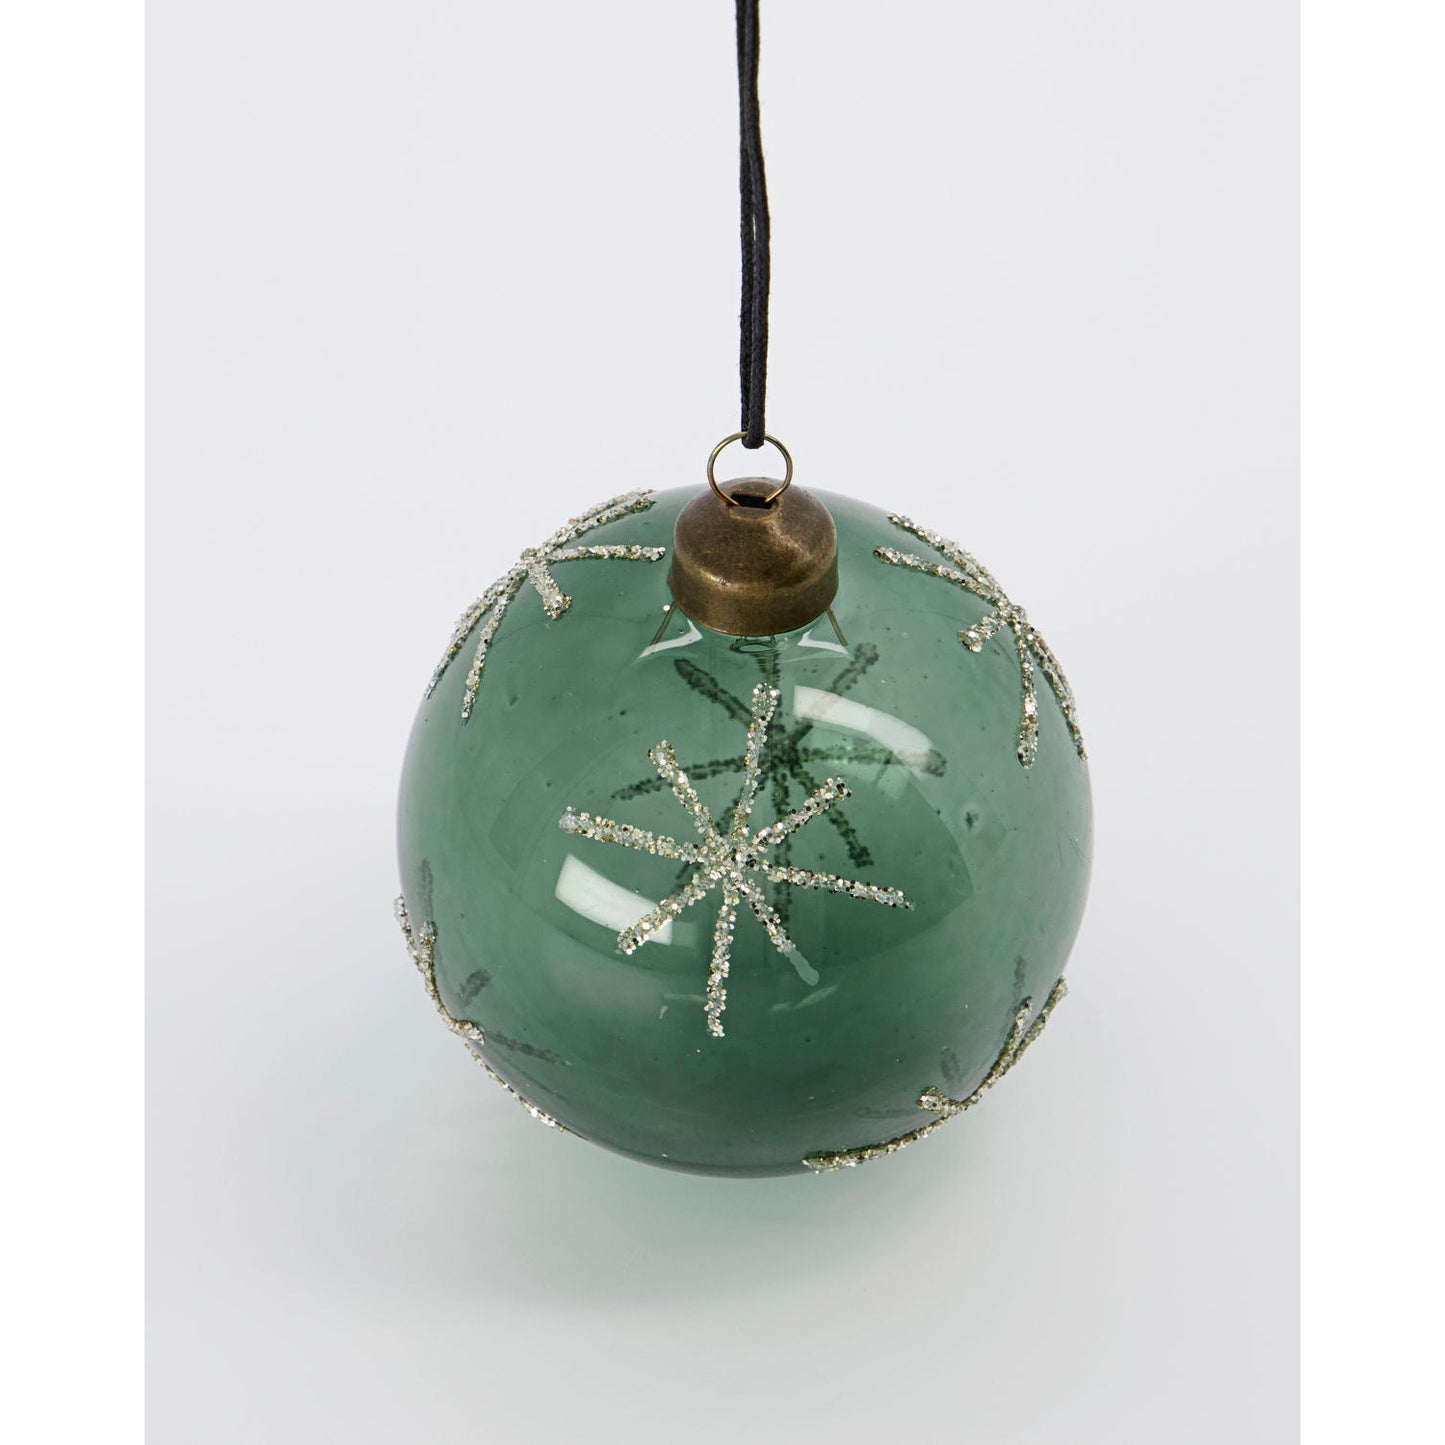 House Doctor Weihnachtsbaumkugel / Ornament Star - green -